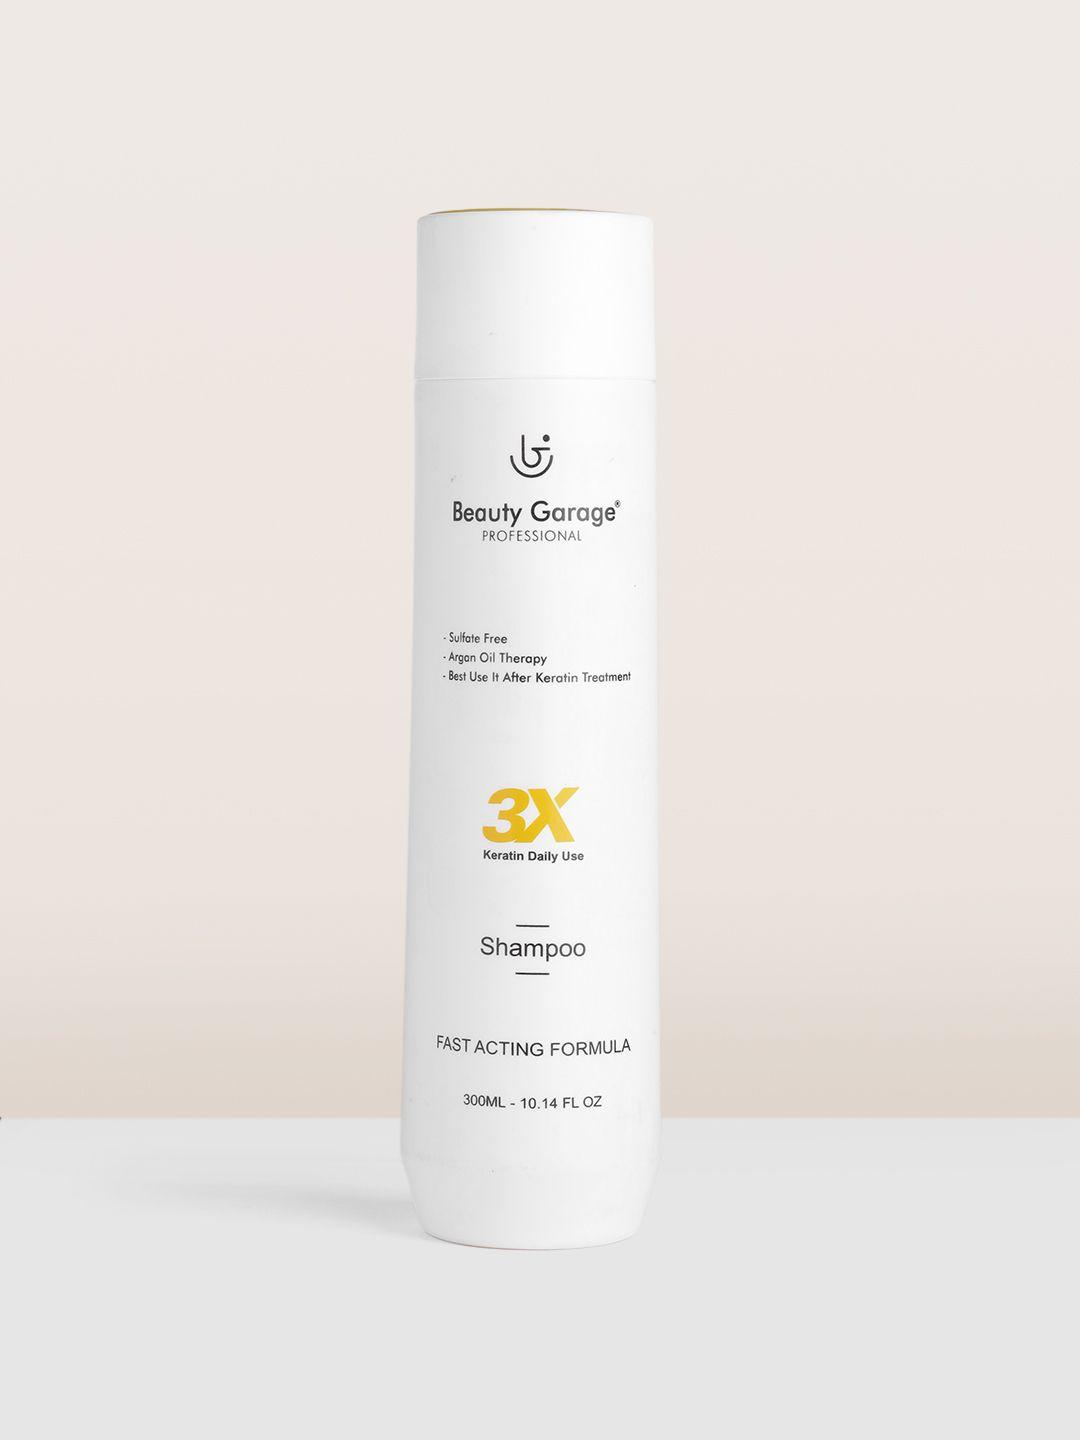 beauty garage sulfate-free 3x keratin daily use shampoo - 300 ml